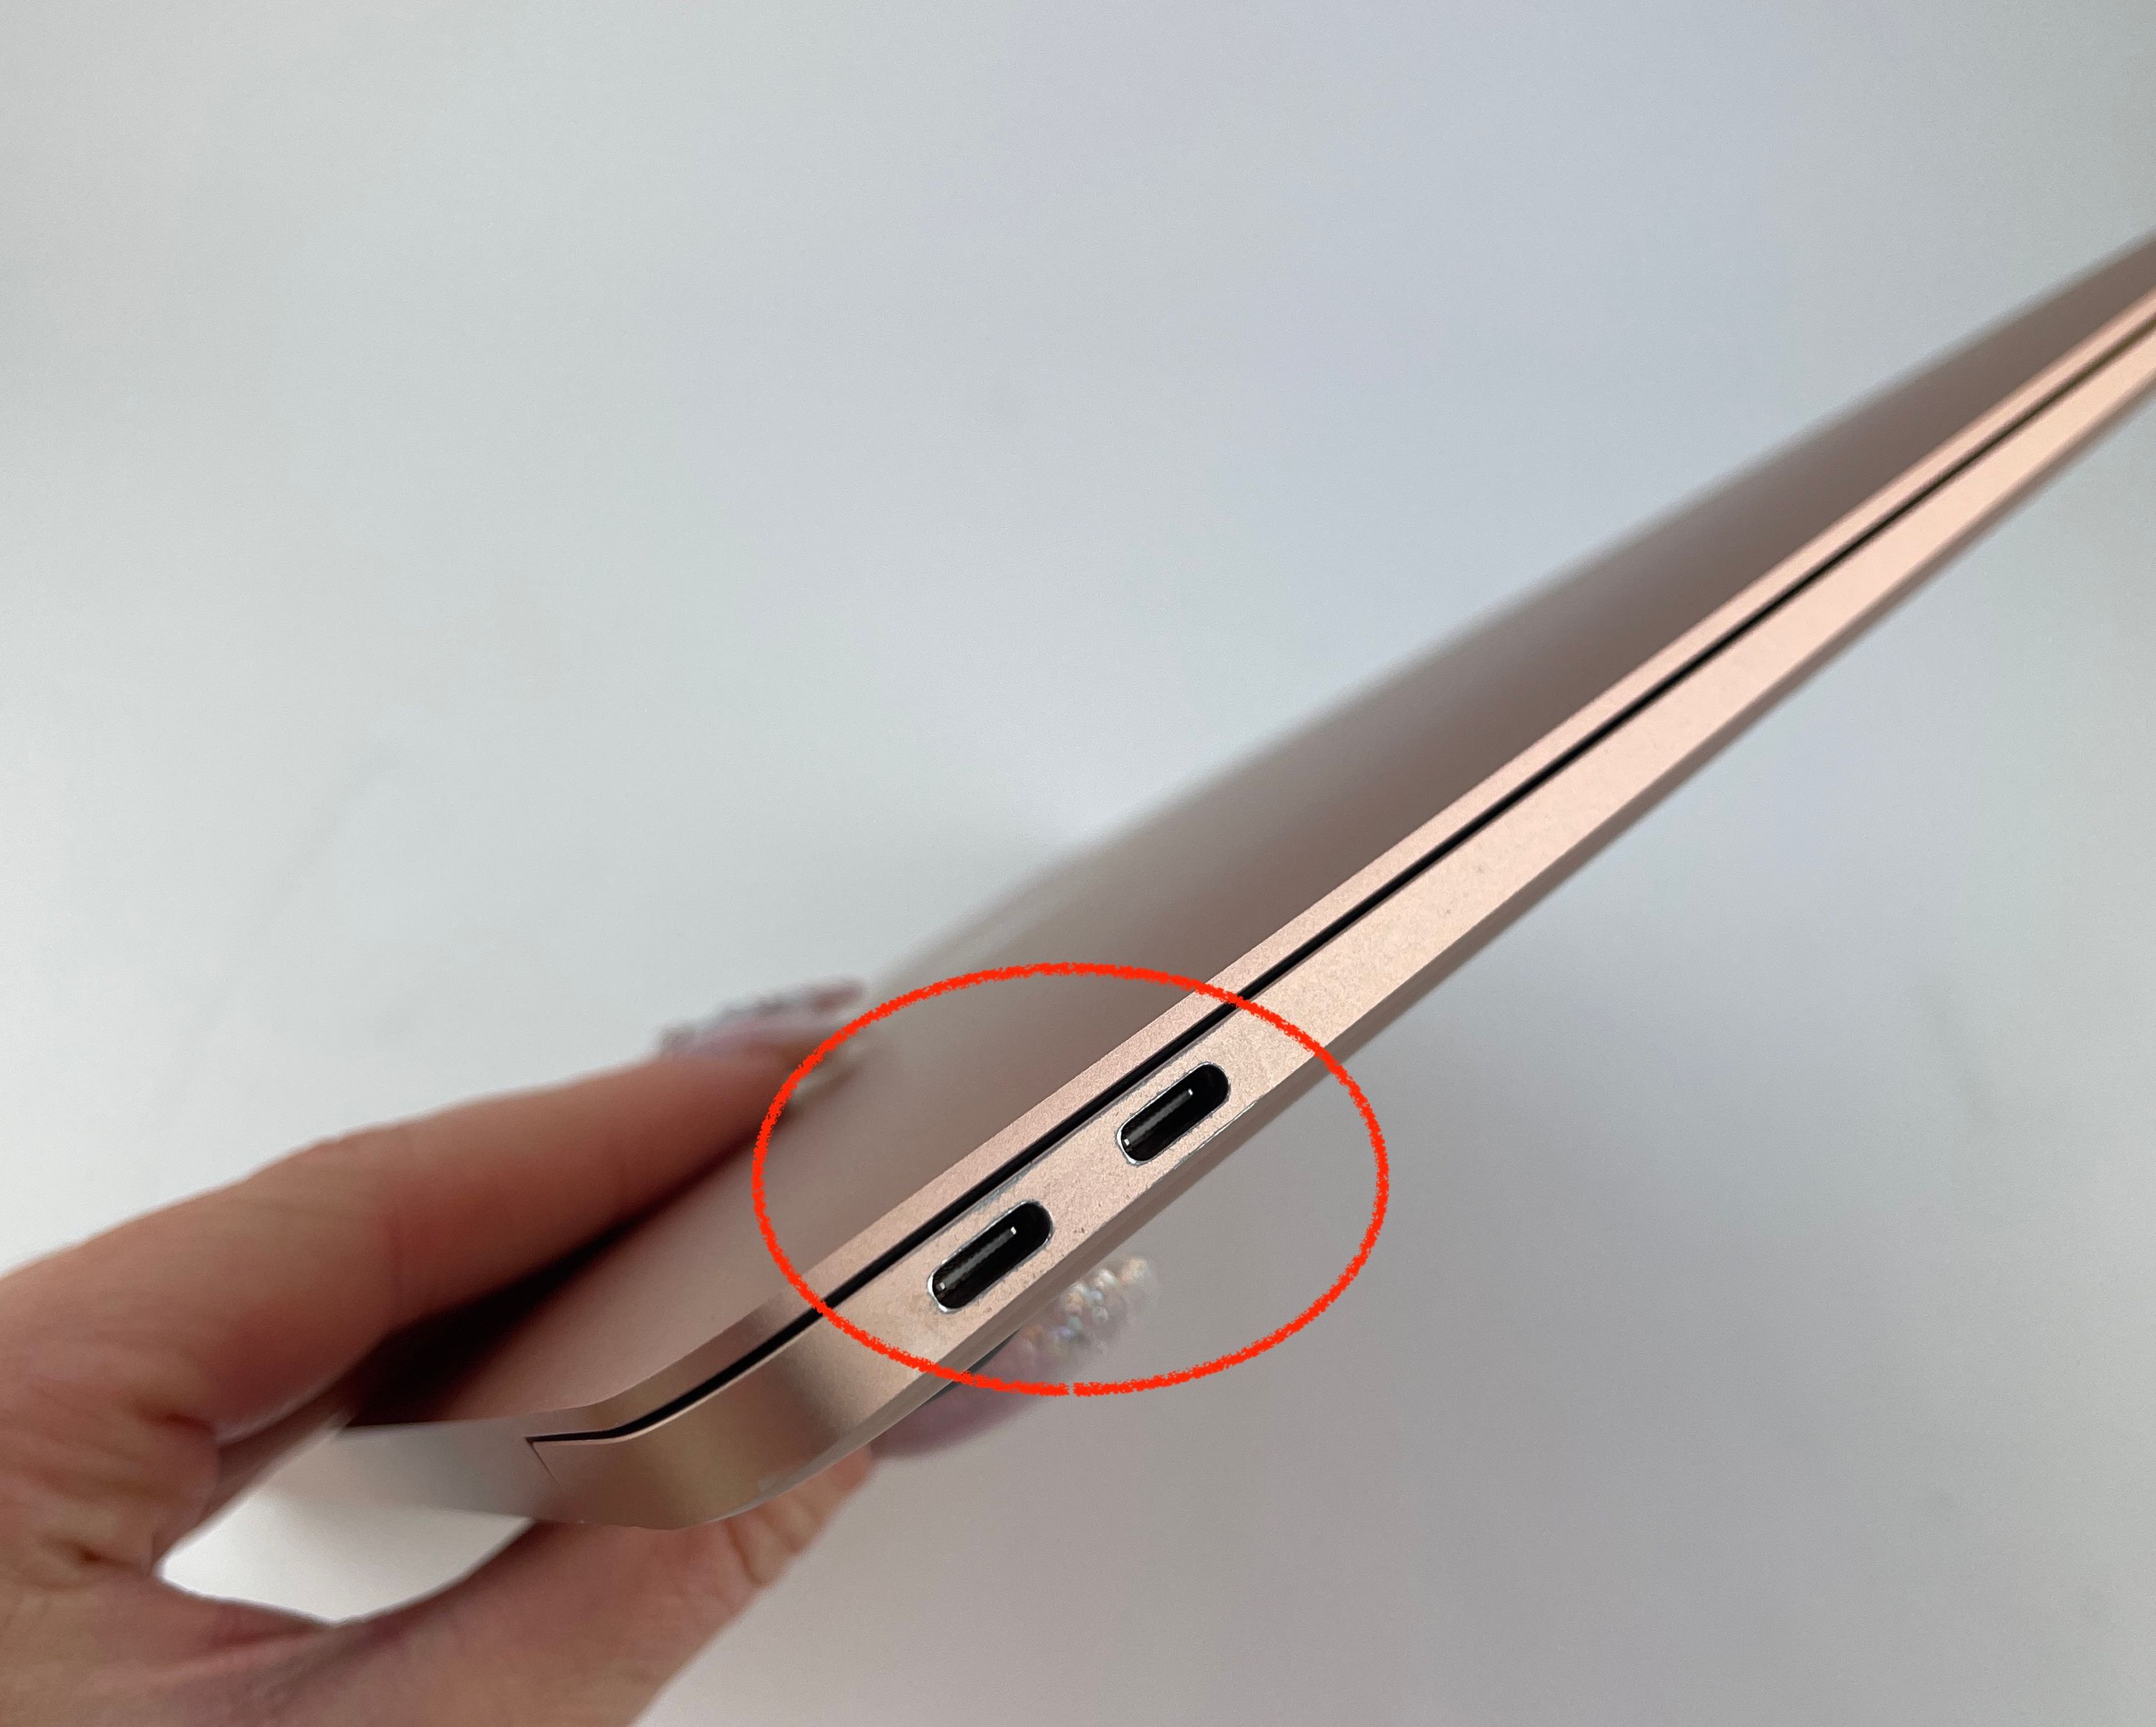 Apple MacBook Air 13" (2020) Core i7 1,2 GHz - Gold